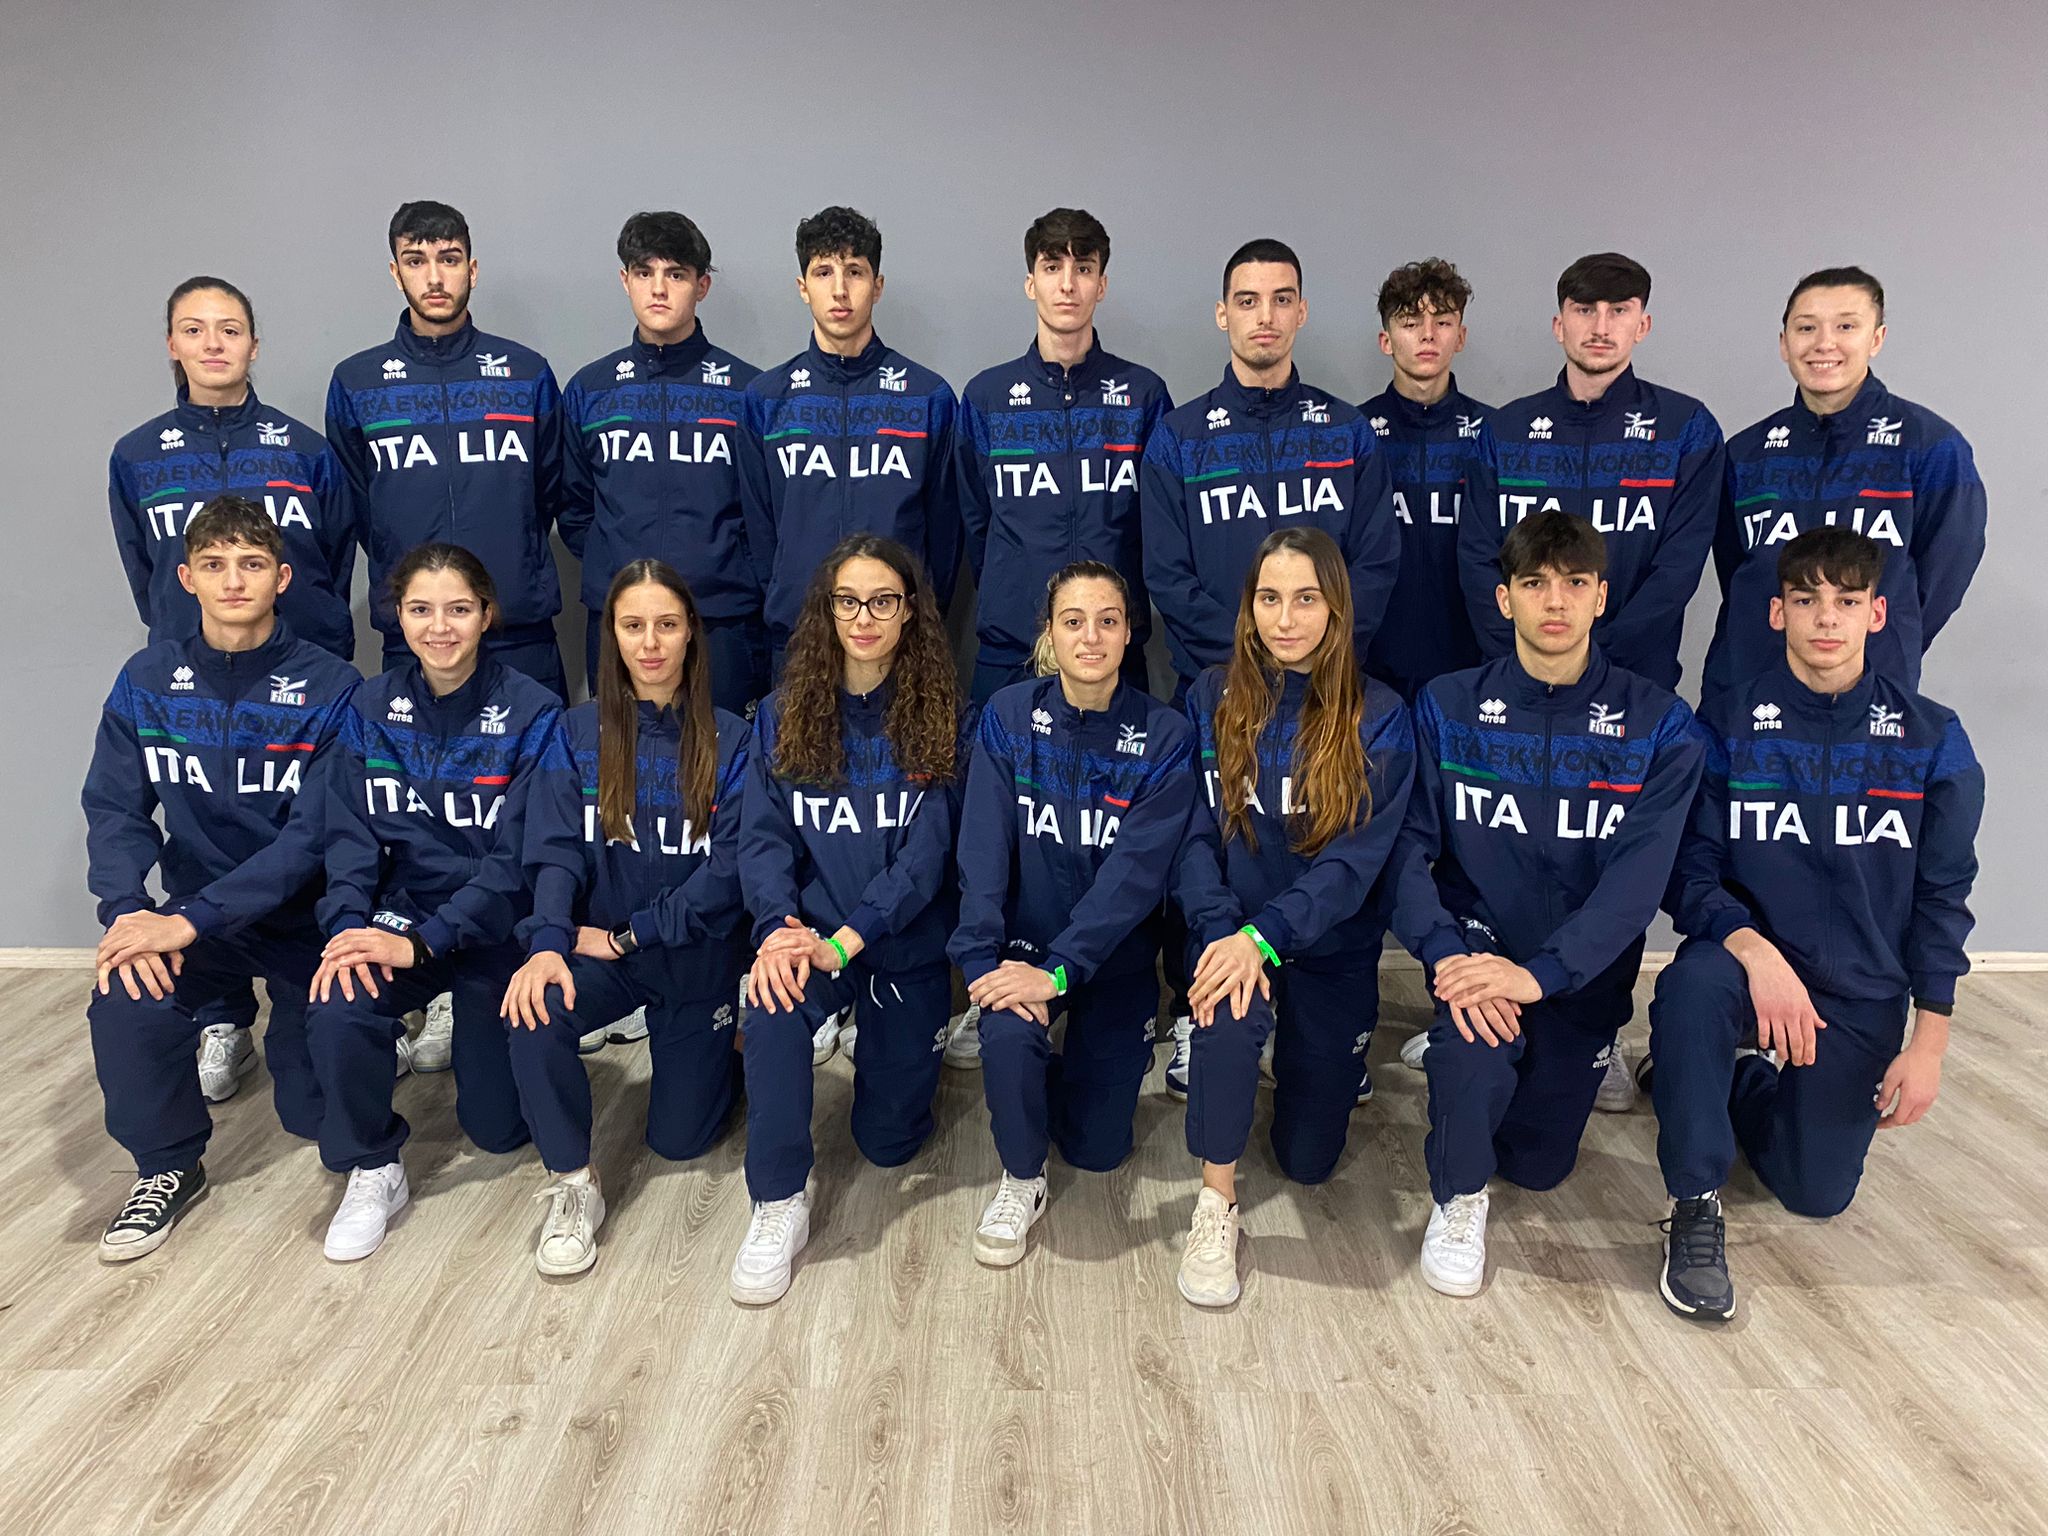 Campionati Europei Under 21: giornata ricca di Medaglie per l'Italia